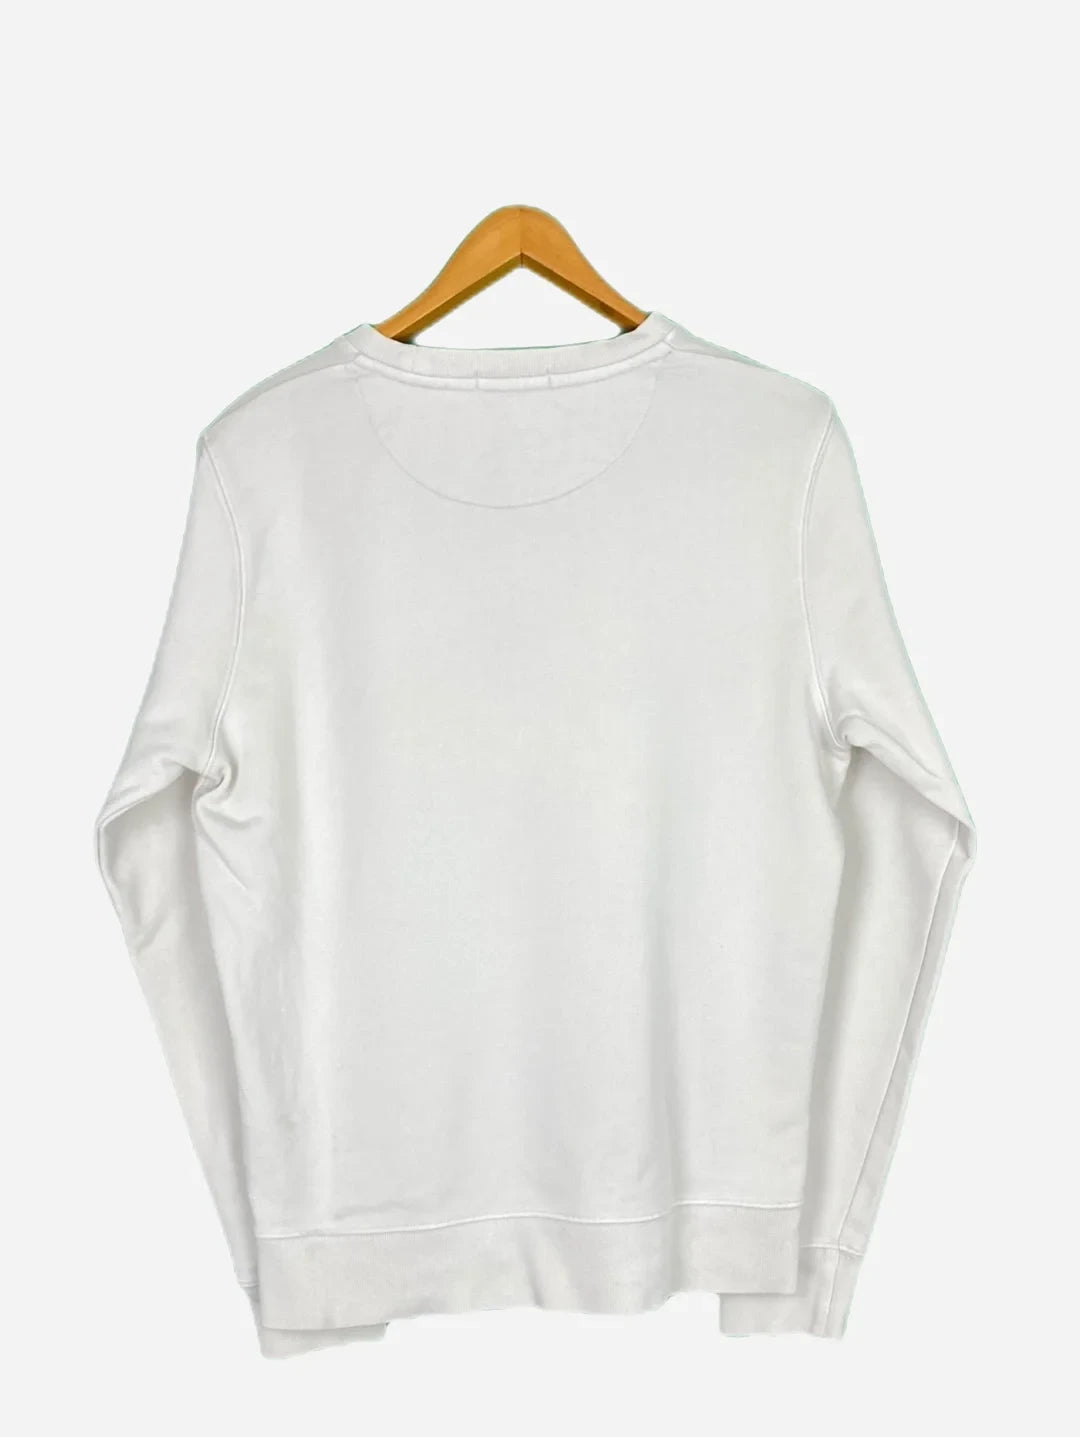 Gant Sweater (M)